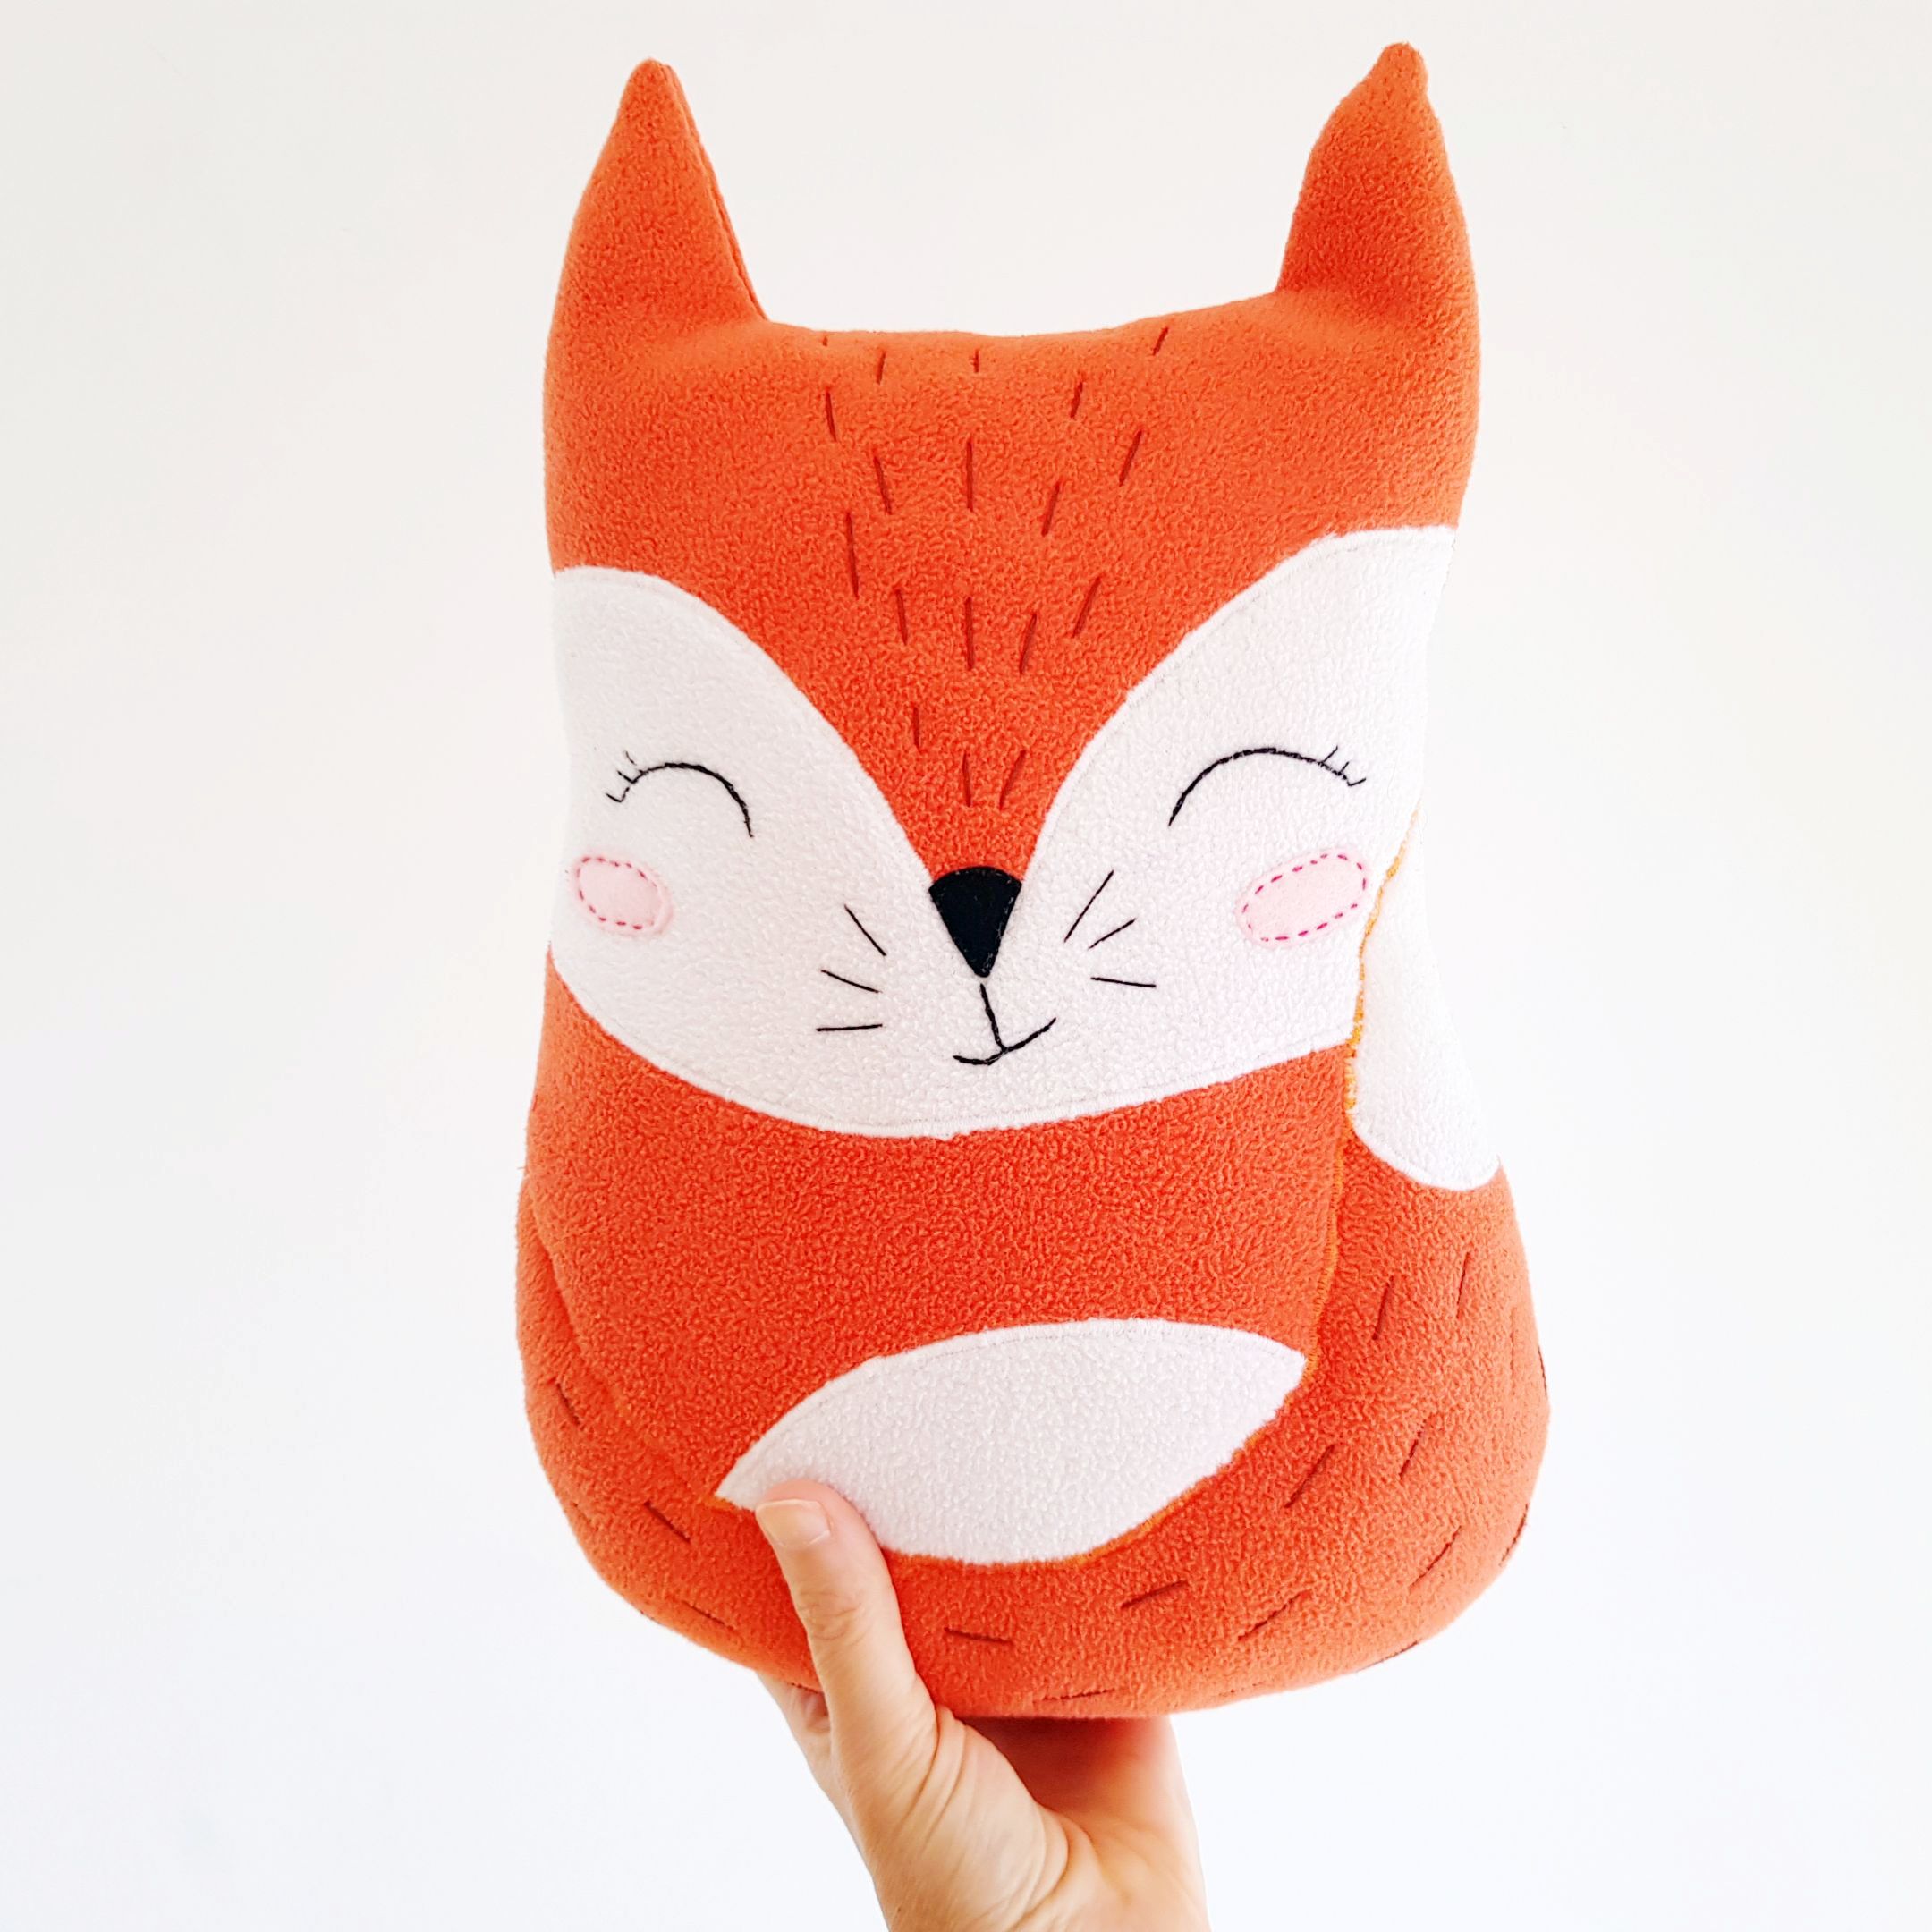 FOX PILLOW SEWING PATTERN, cute stuffed animal toy